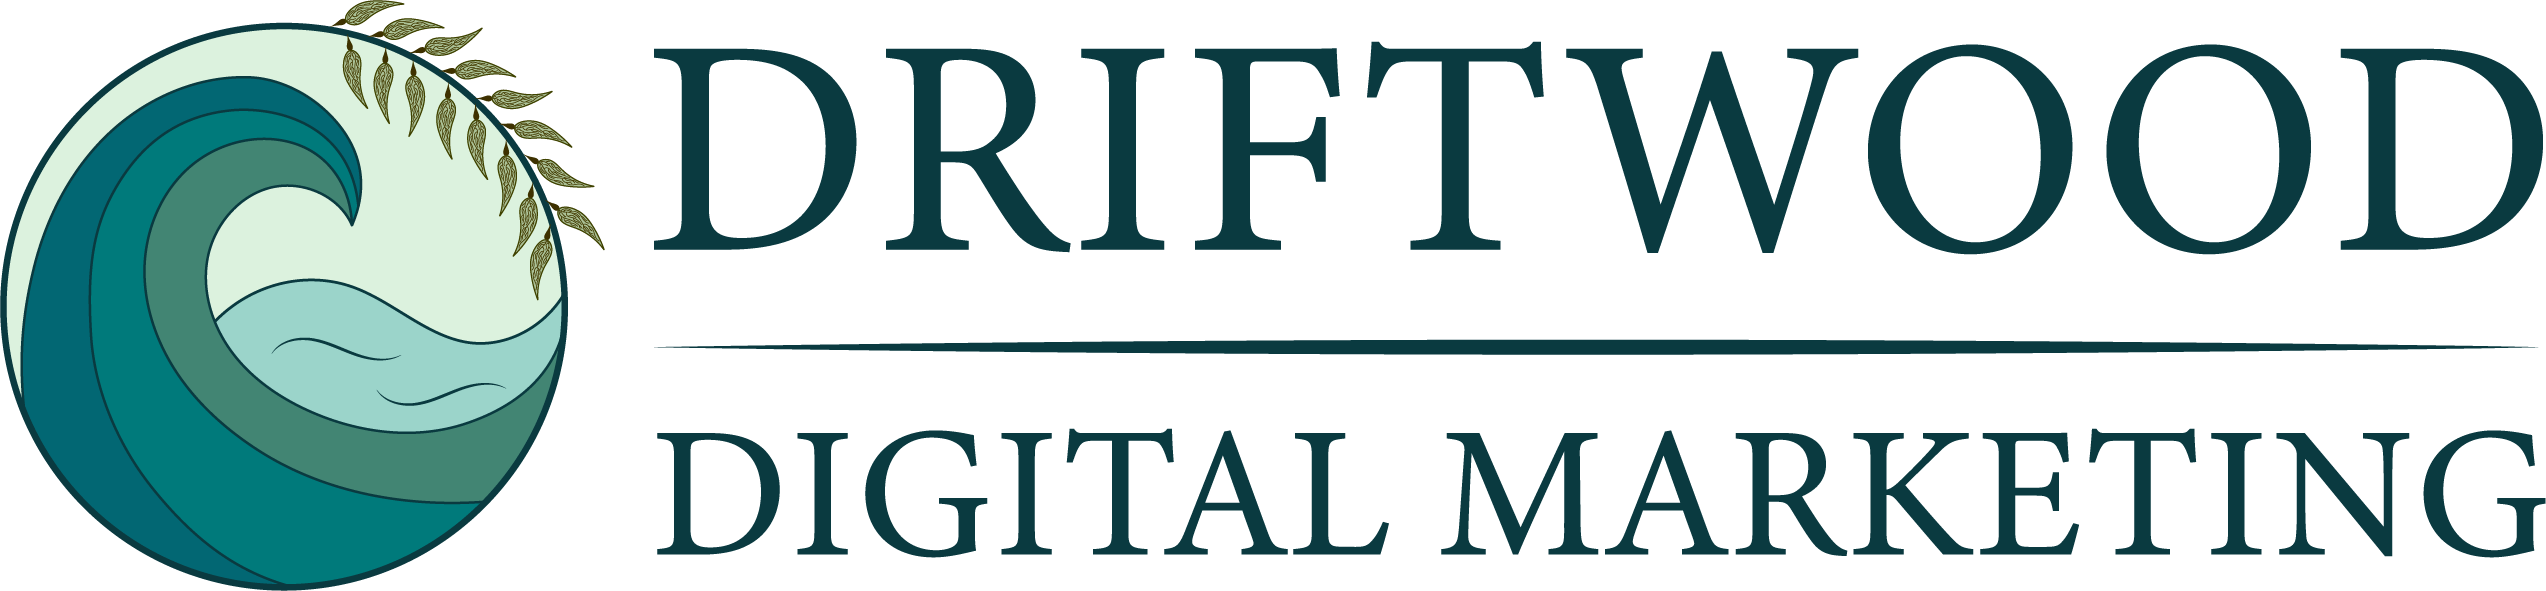 Driftwood Digital Marketing